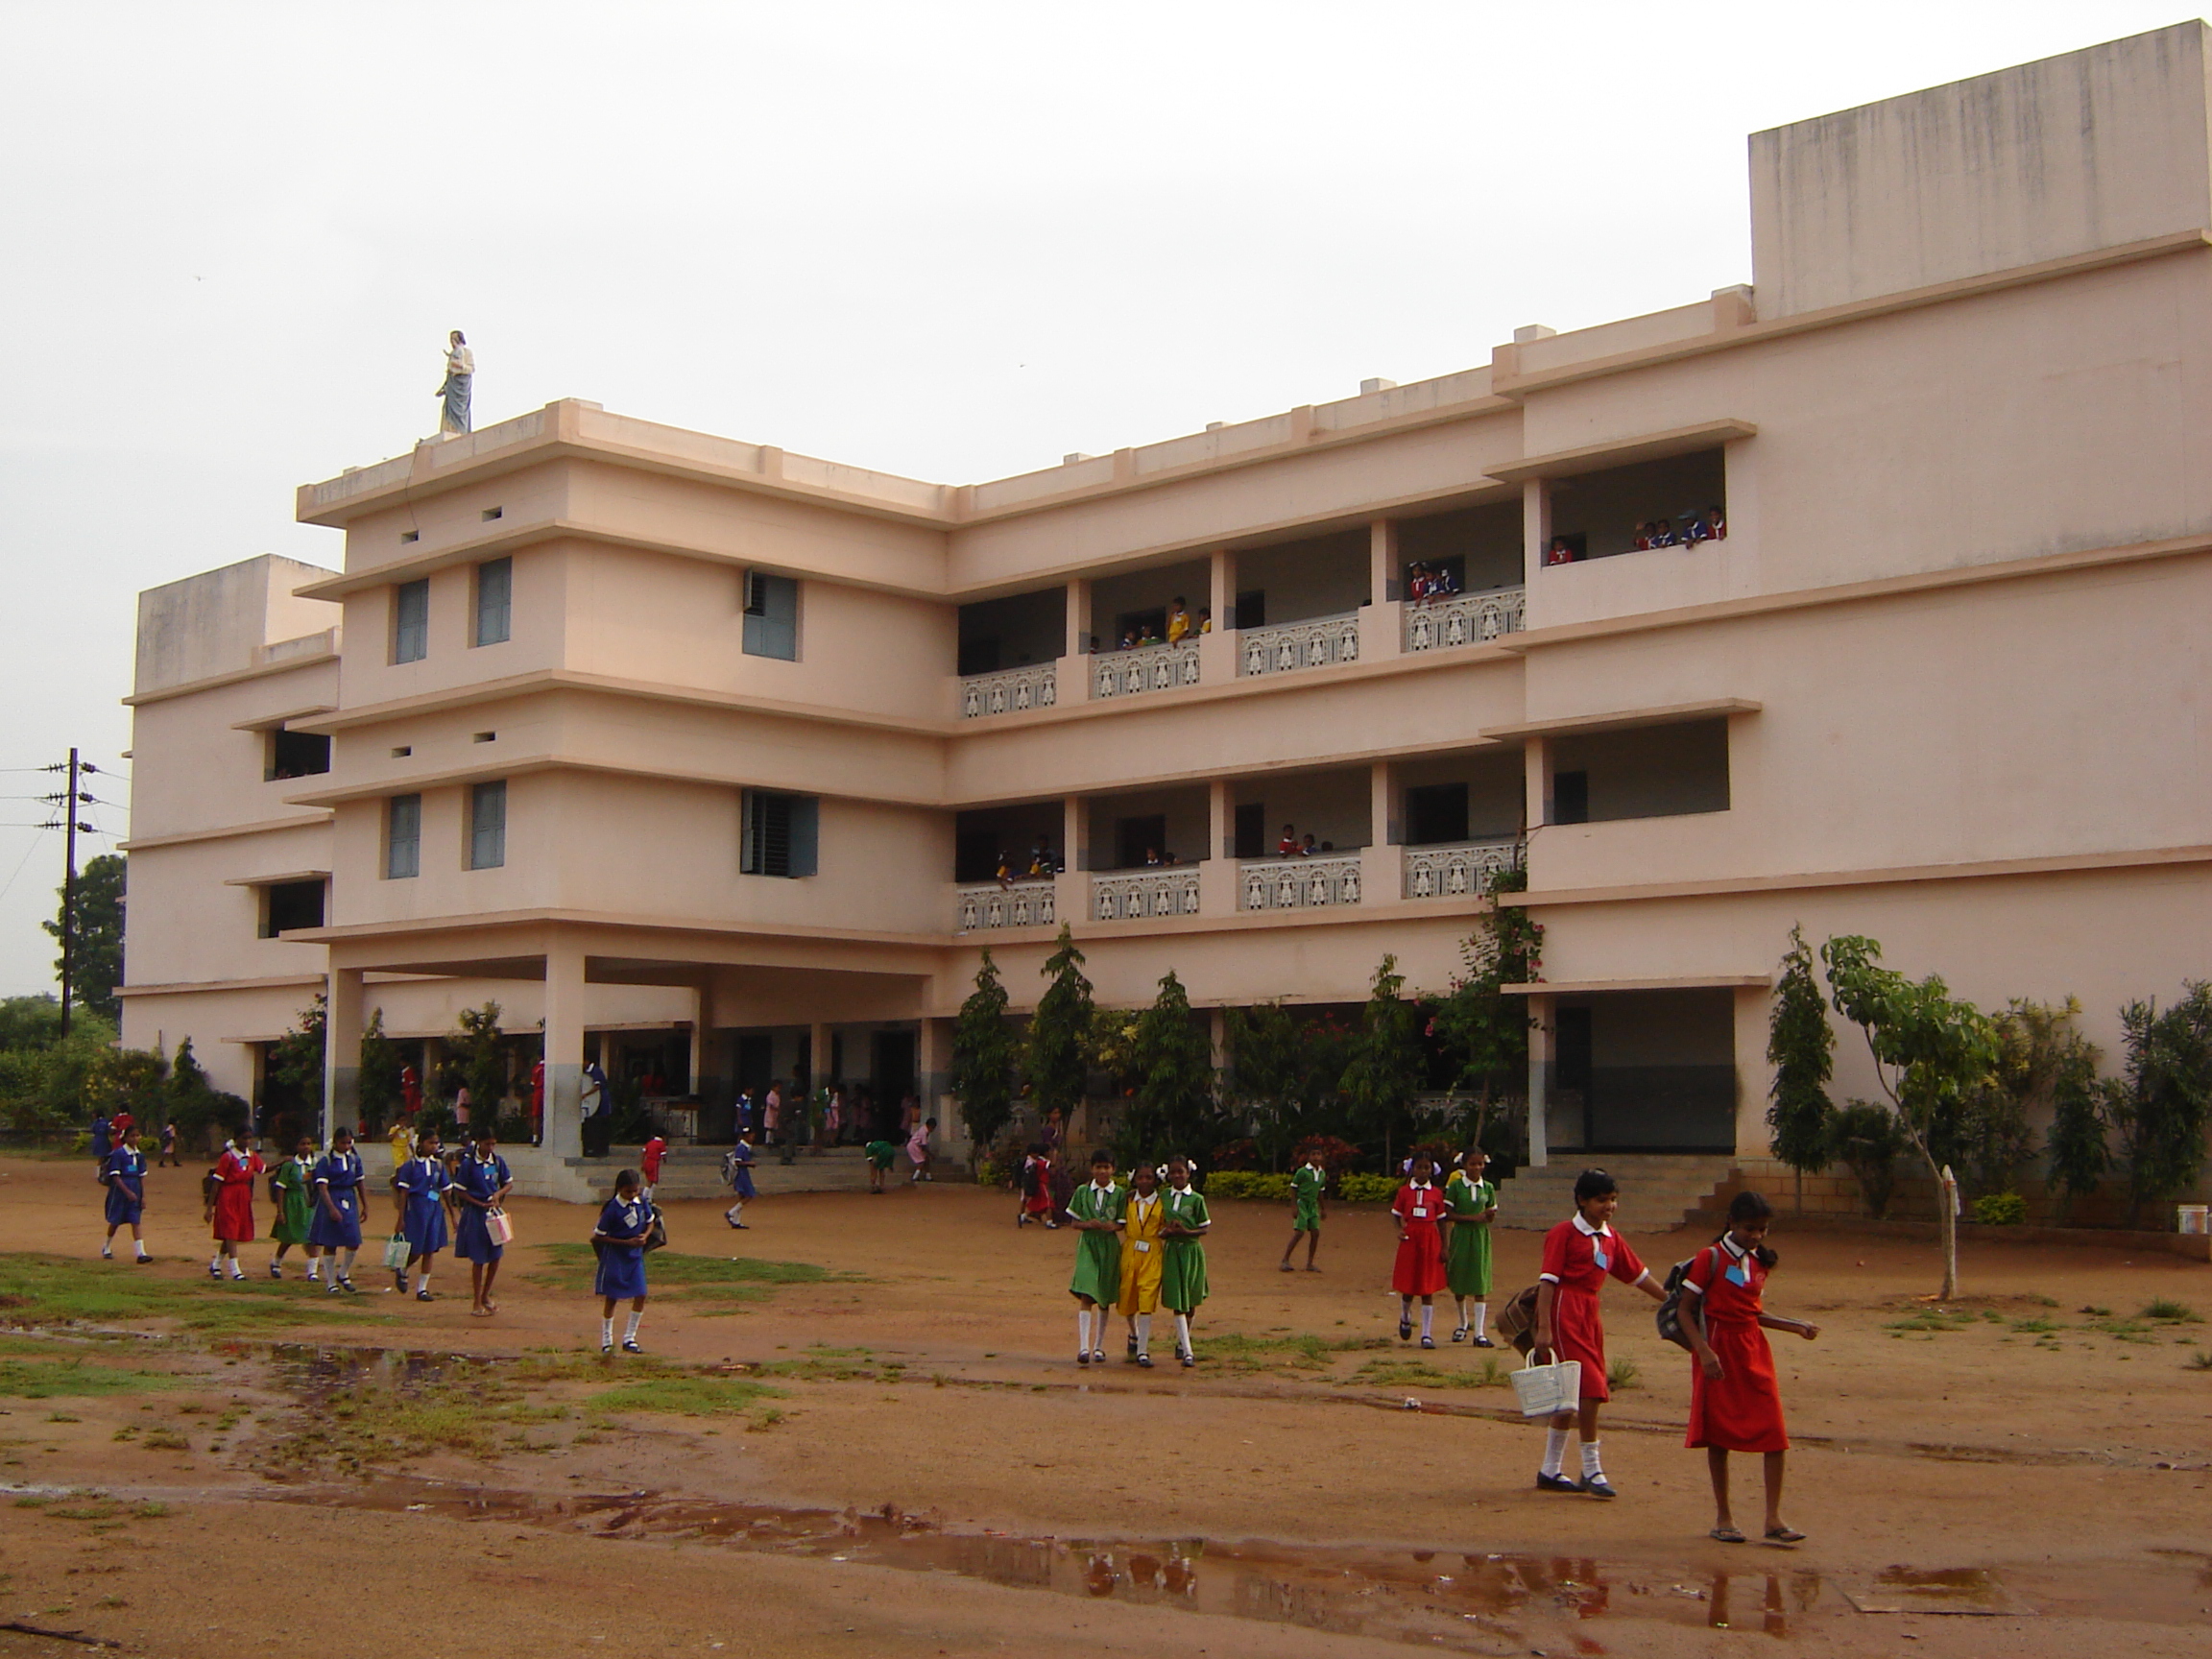 St. Joseph's High School, Aliabad